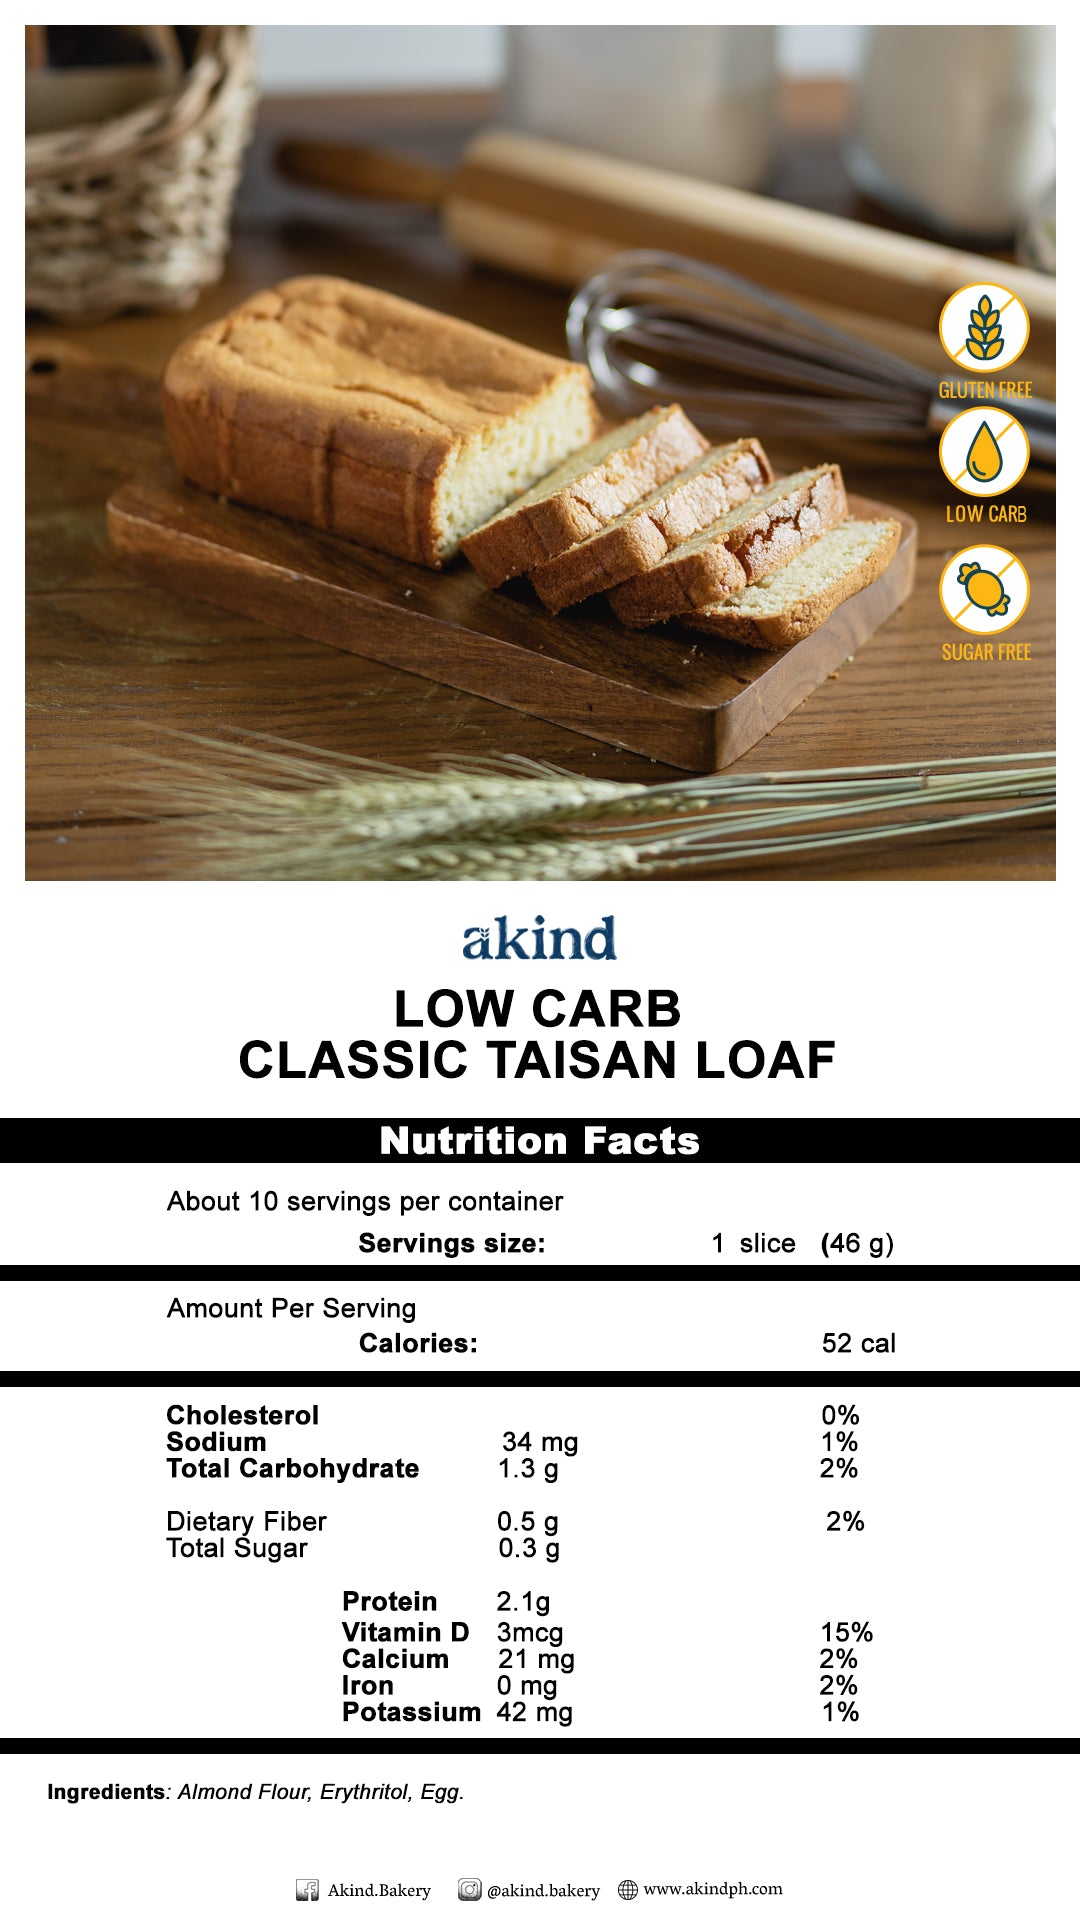 Akind Classic Taisan Loaf